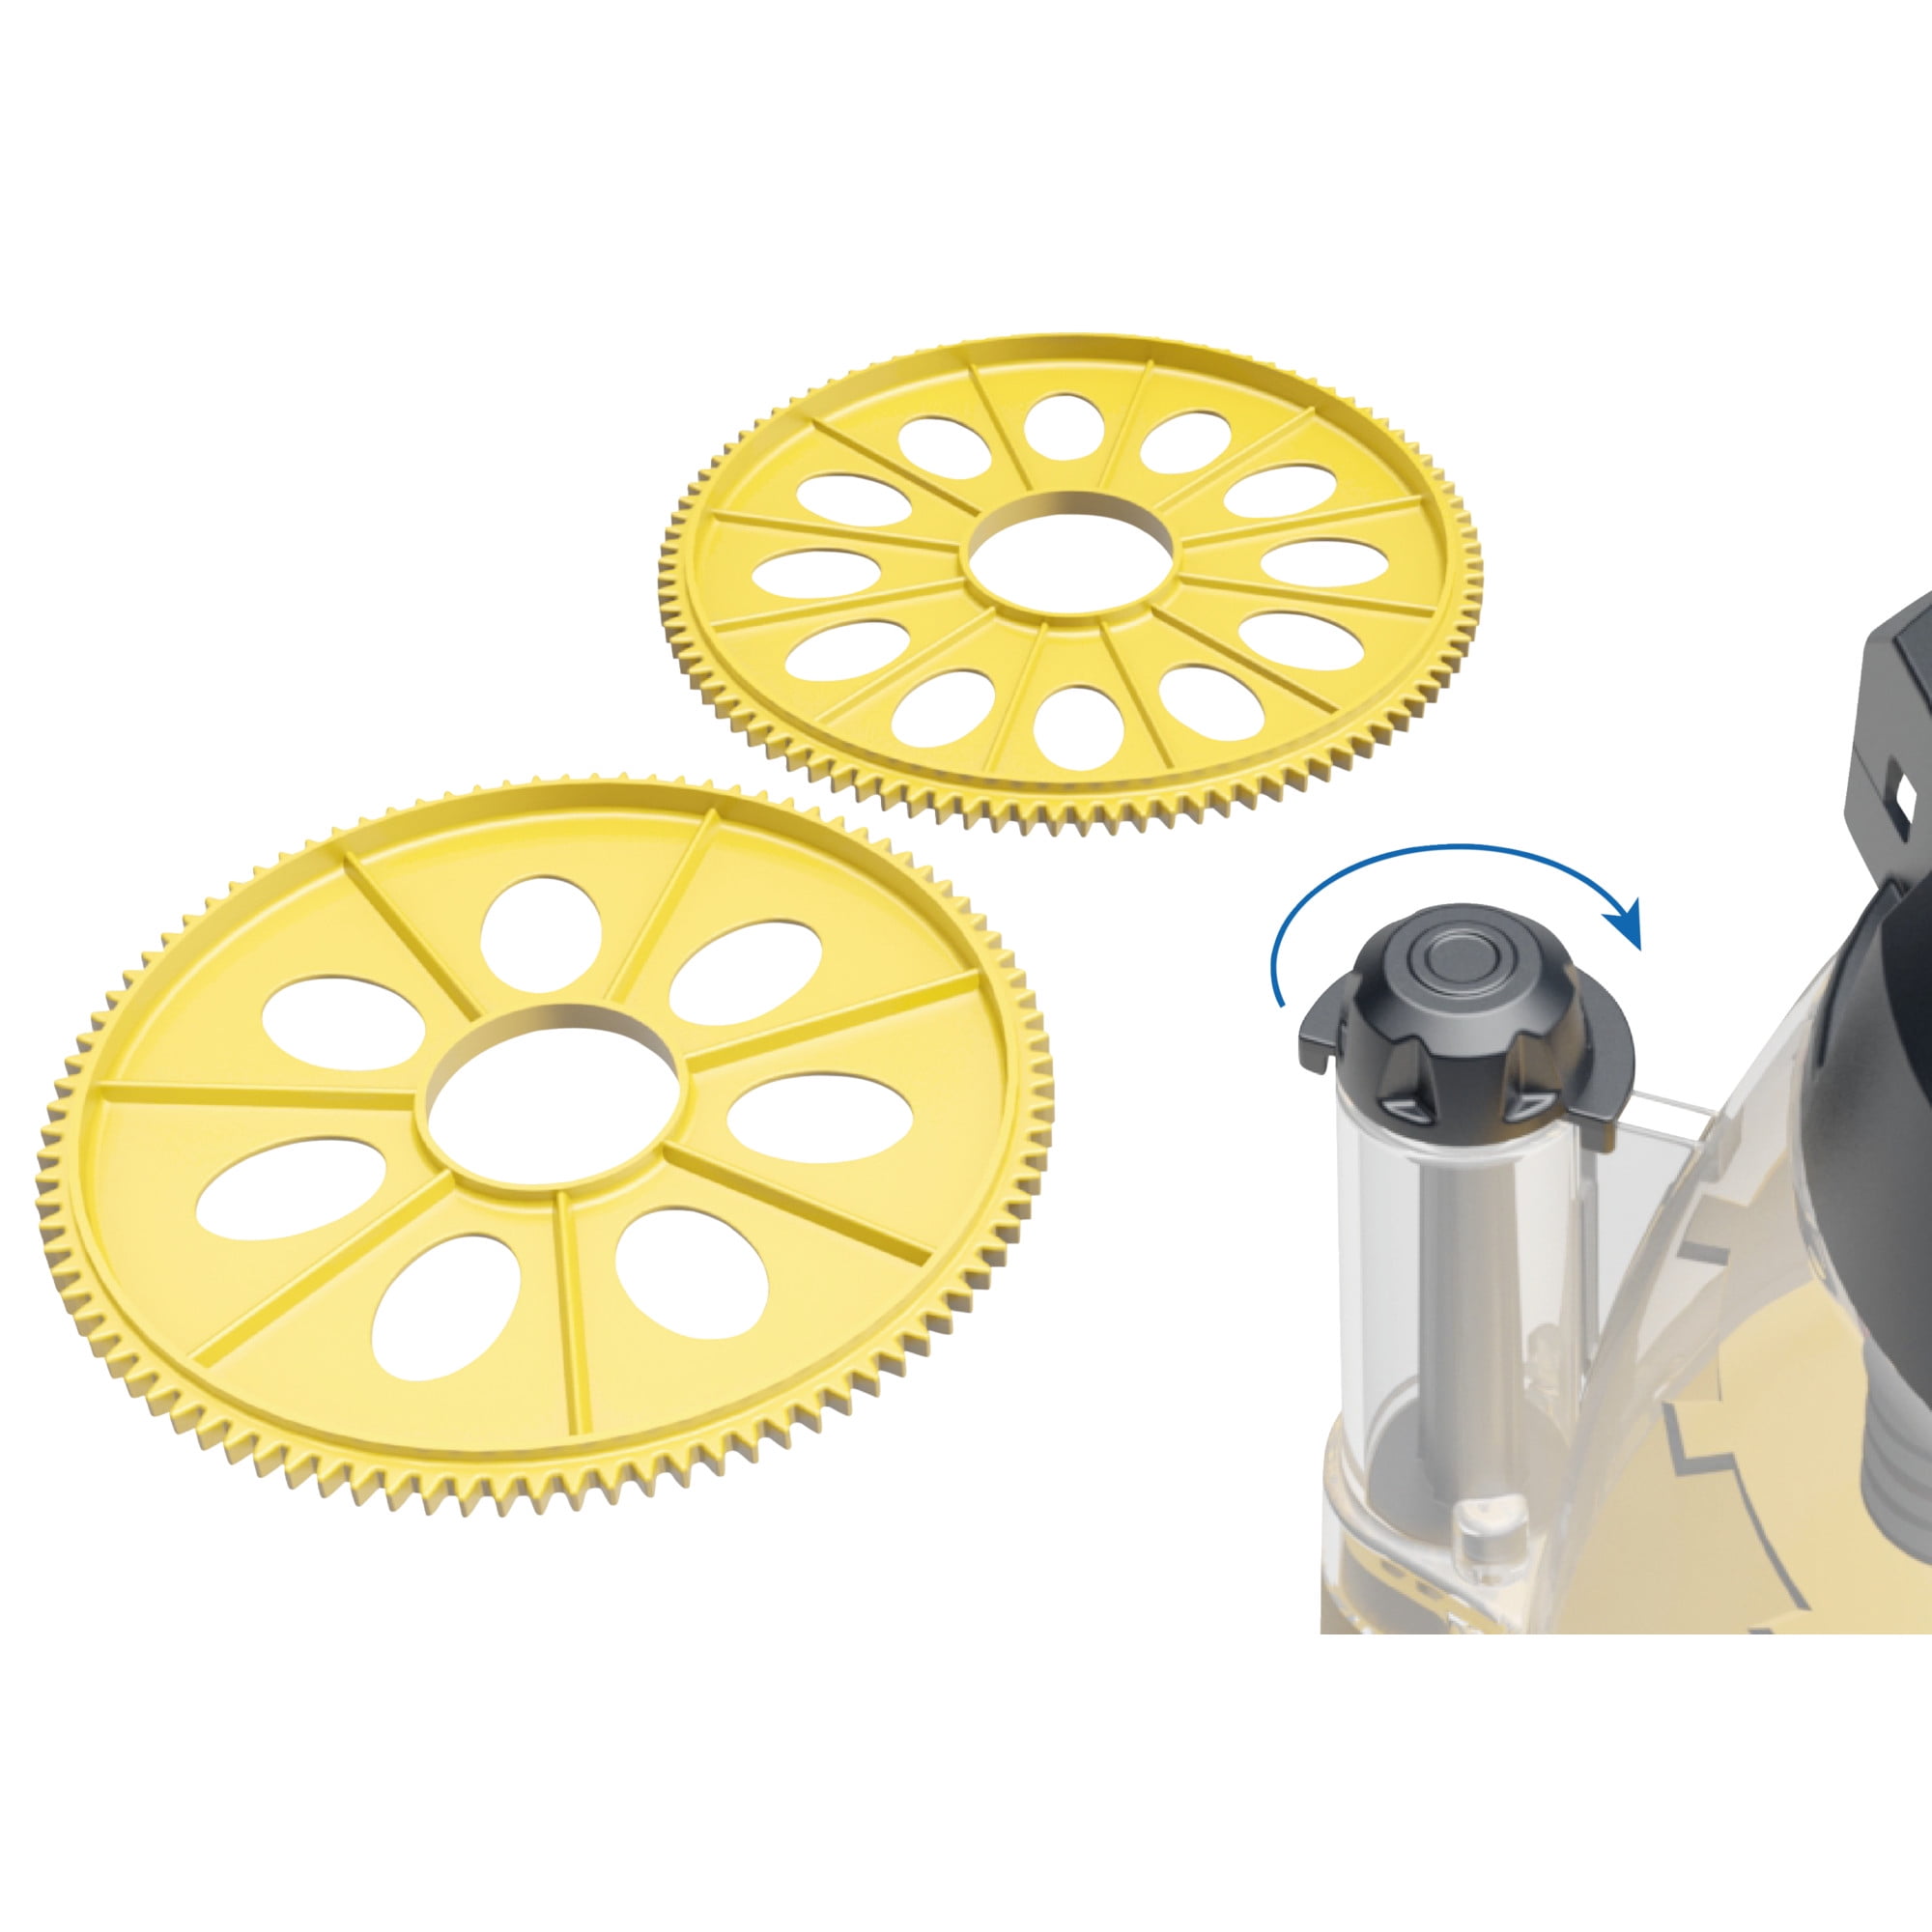 Picture of Brinsea Products USAB010 Semi-Automatic Turning Kit for Mini Eco Egg Incubators